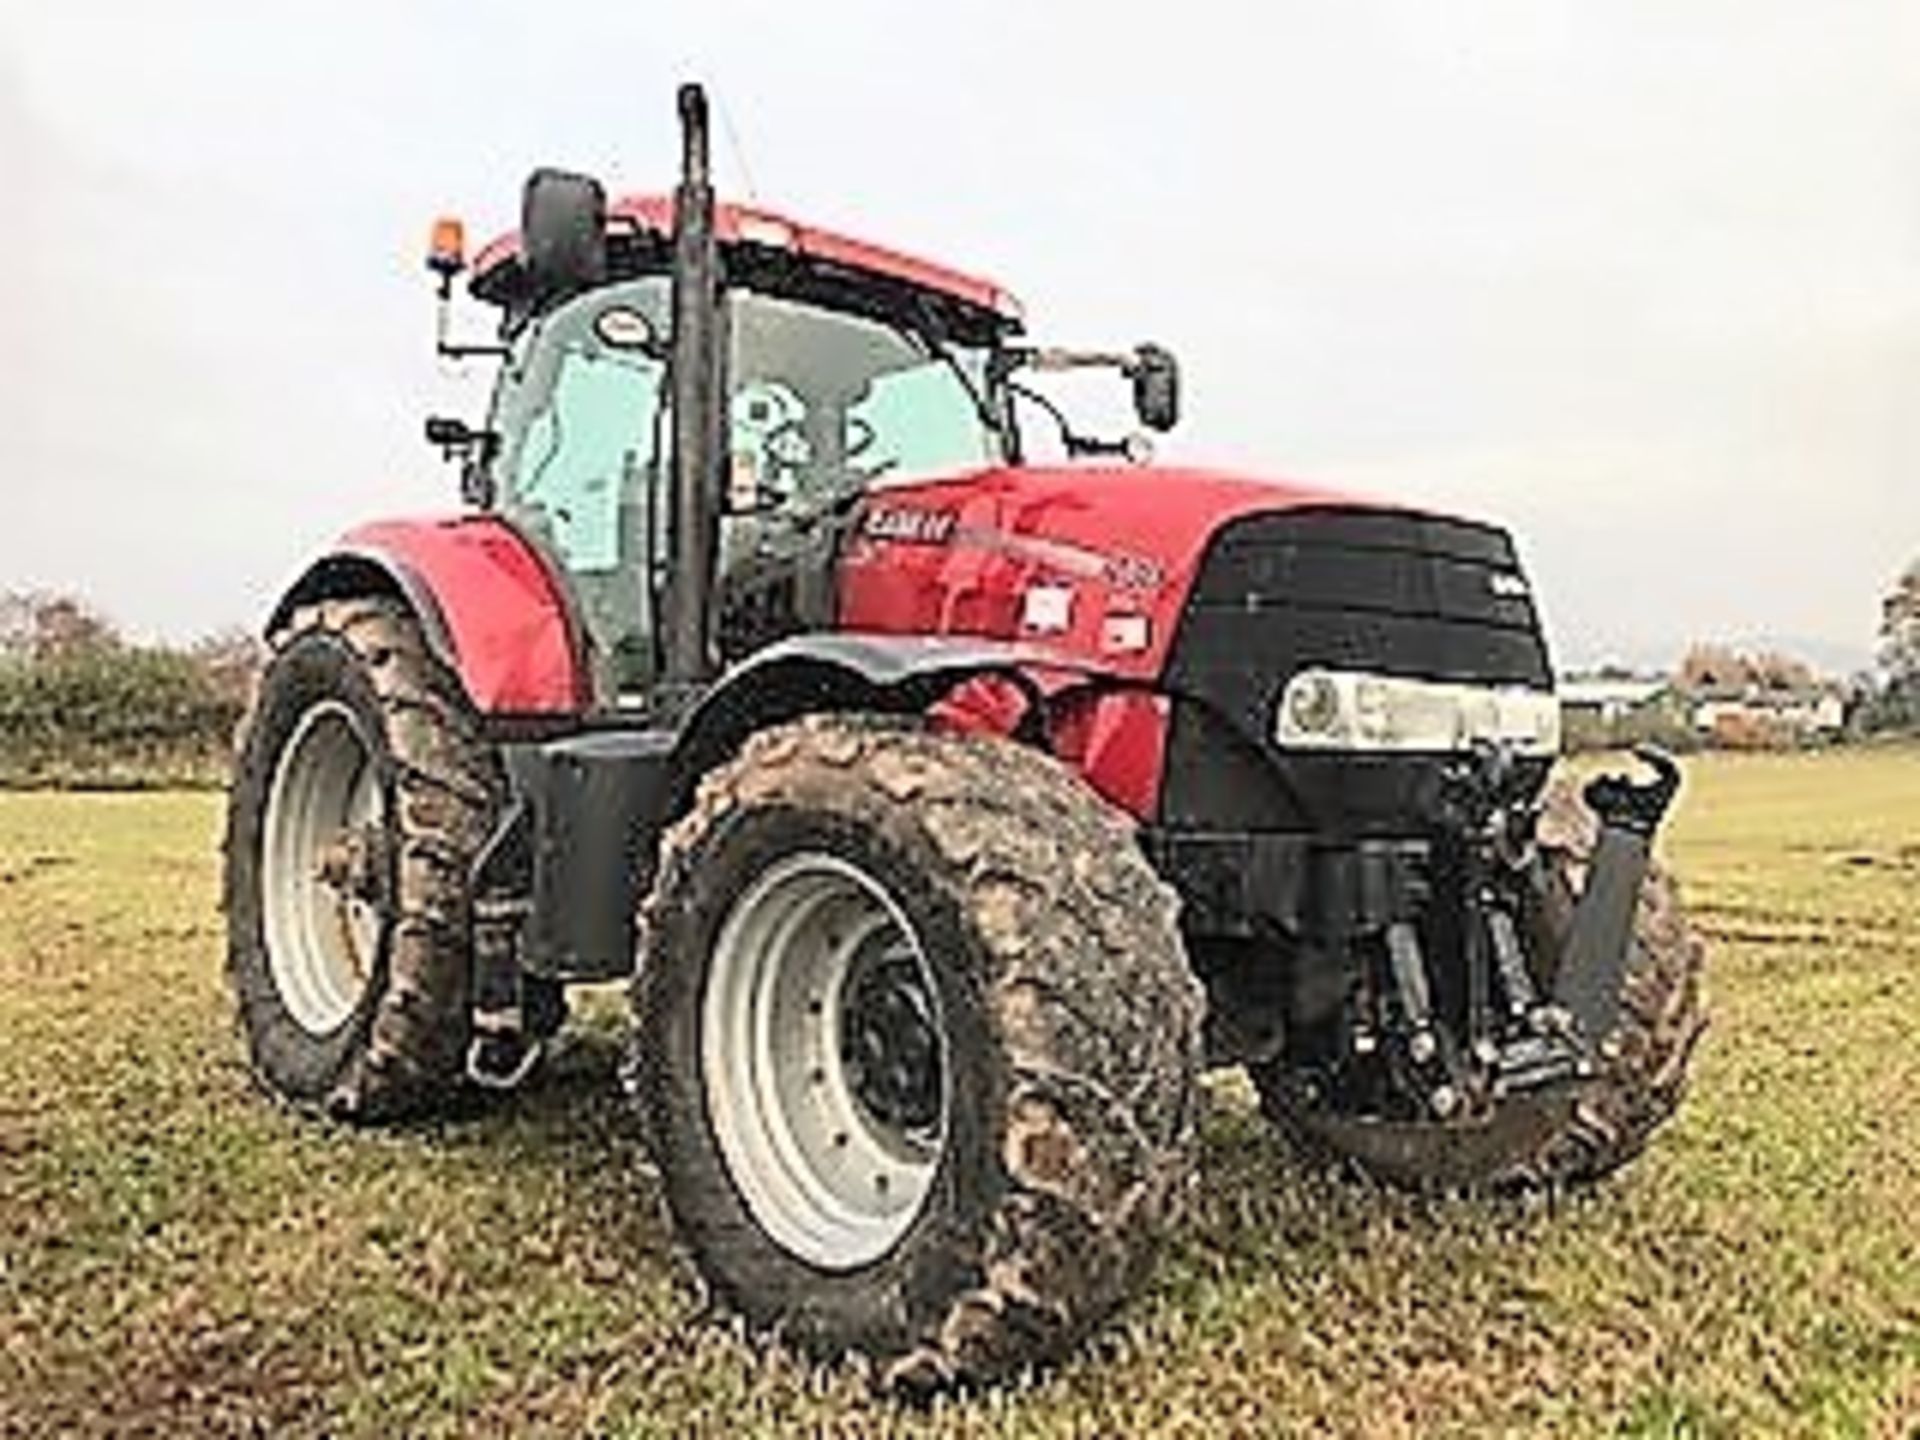 2013 CASE 230 PUMA 4ws tractor. Reg - FJ13HJD. 2742hrs (not verified) - Image 7 of 8